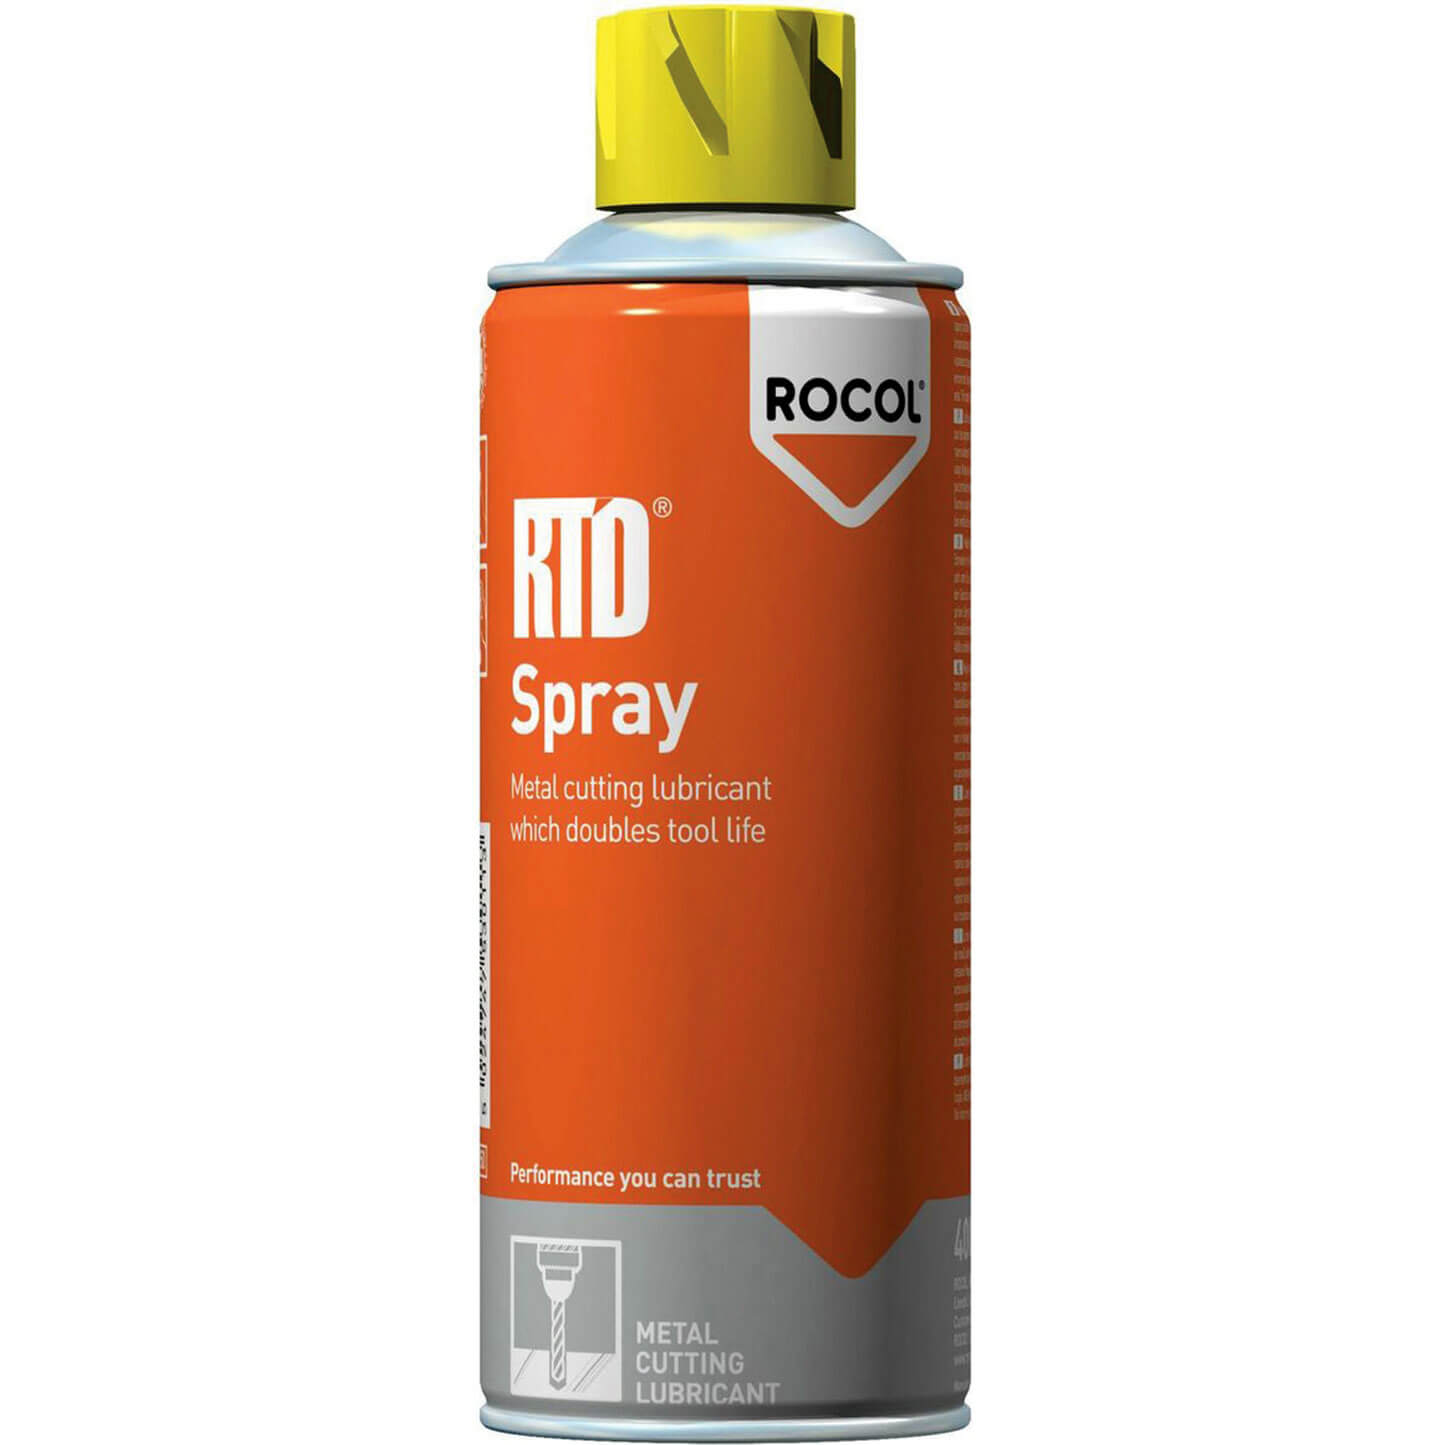 Image of Rocol RTD Metal Cutting Lubricant Spray 400ml